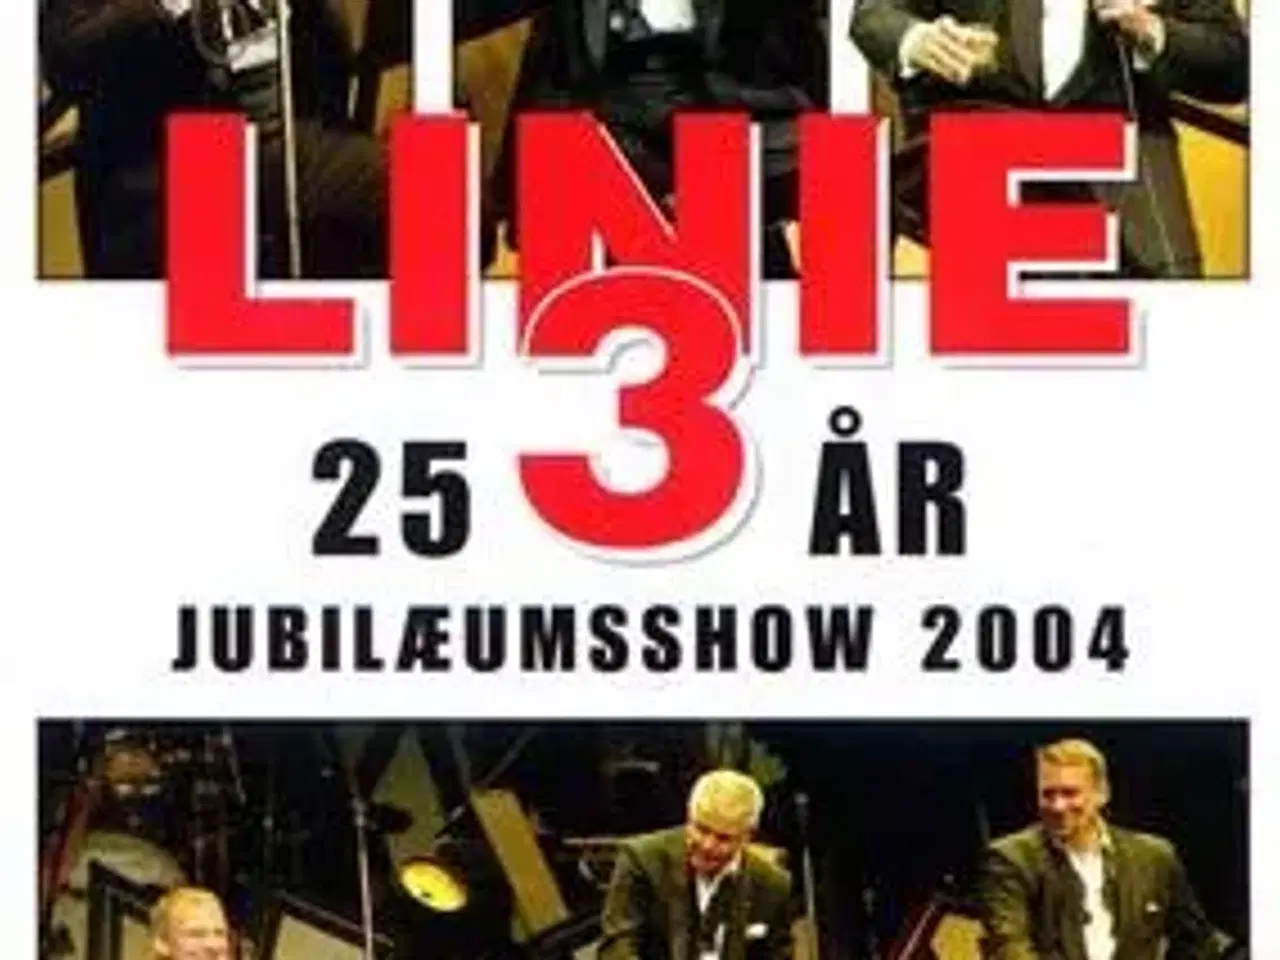 Billede 1 - LINIE 3 ; 25 års jubilæumsshow